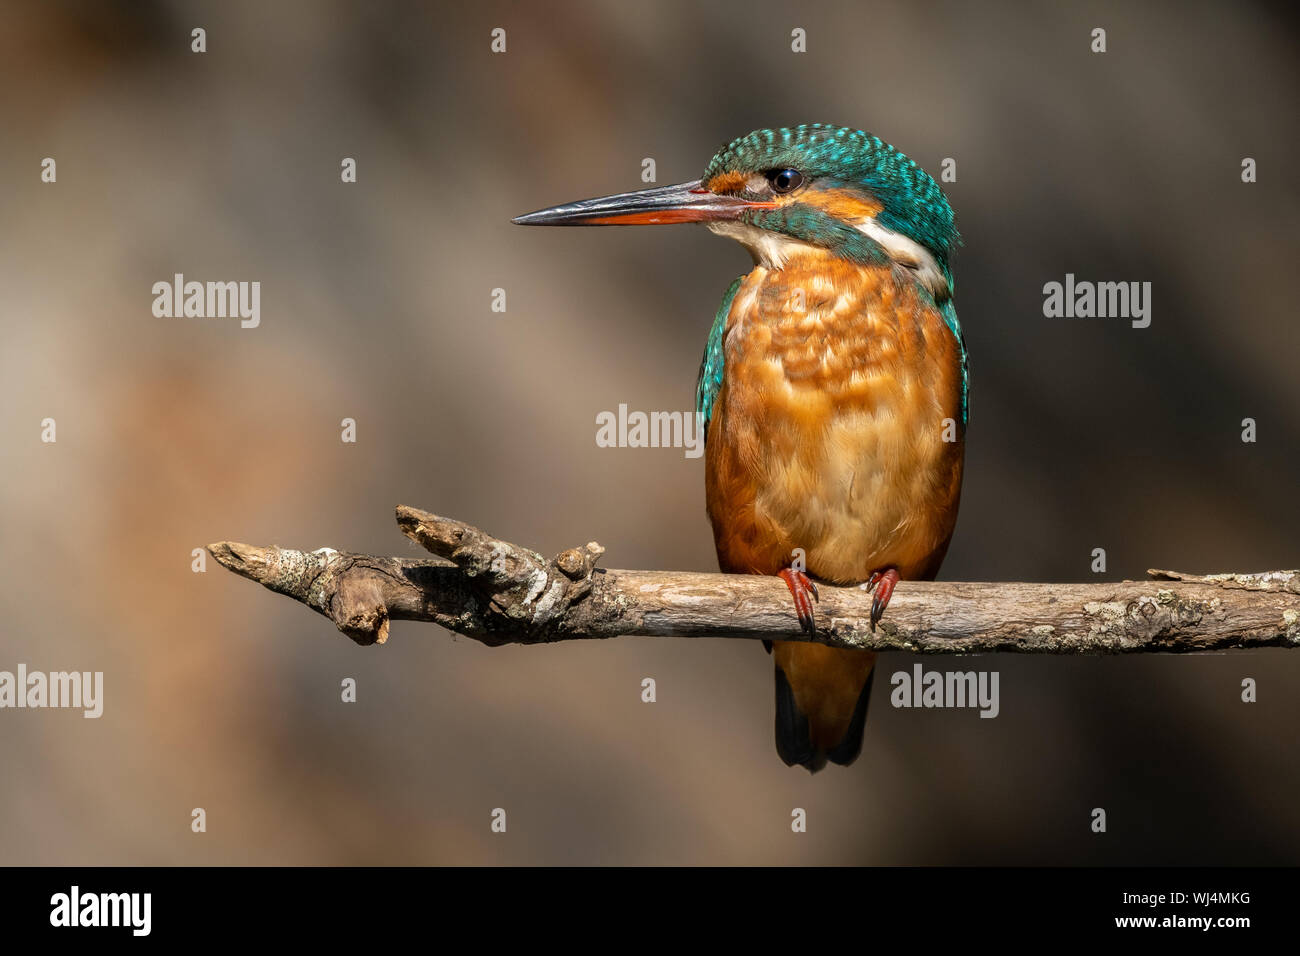 Common Kingfisher (Juvenile Female) - Guarda-rios (juvenil femea) - Alcedo atthis Stock Photo